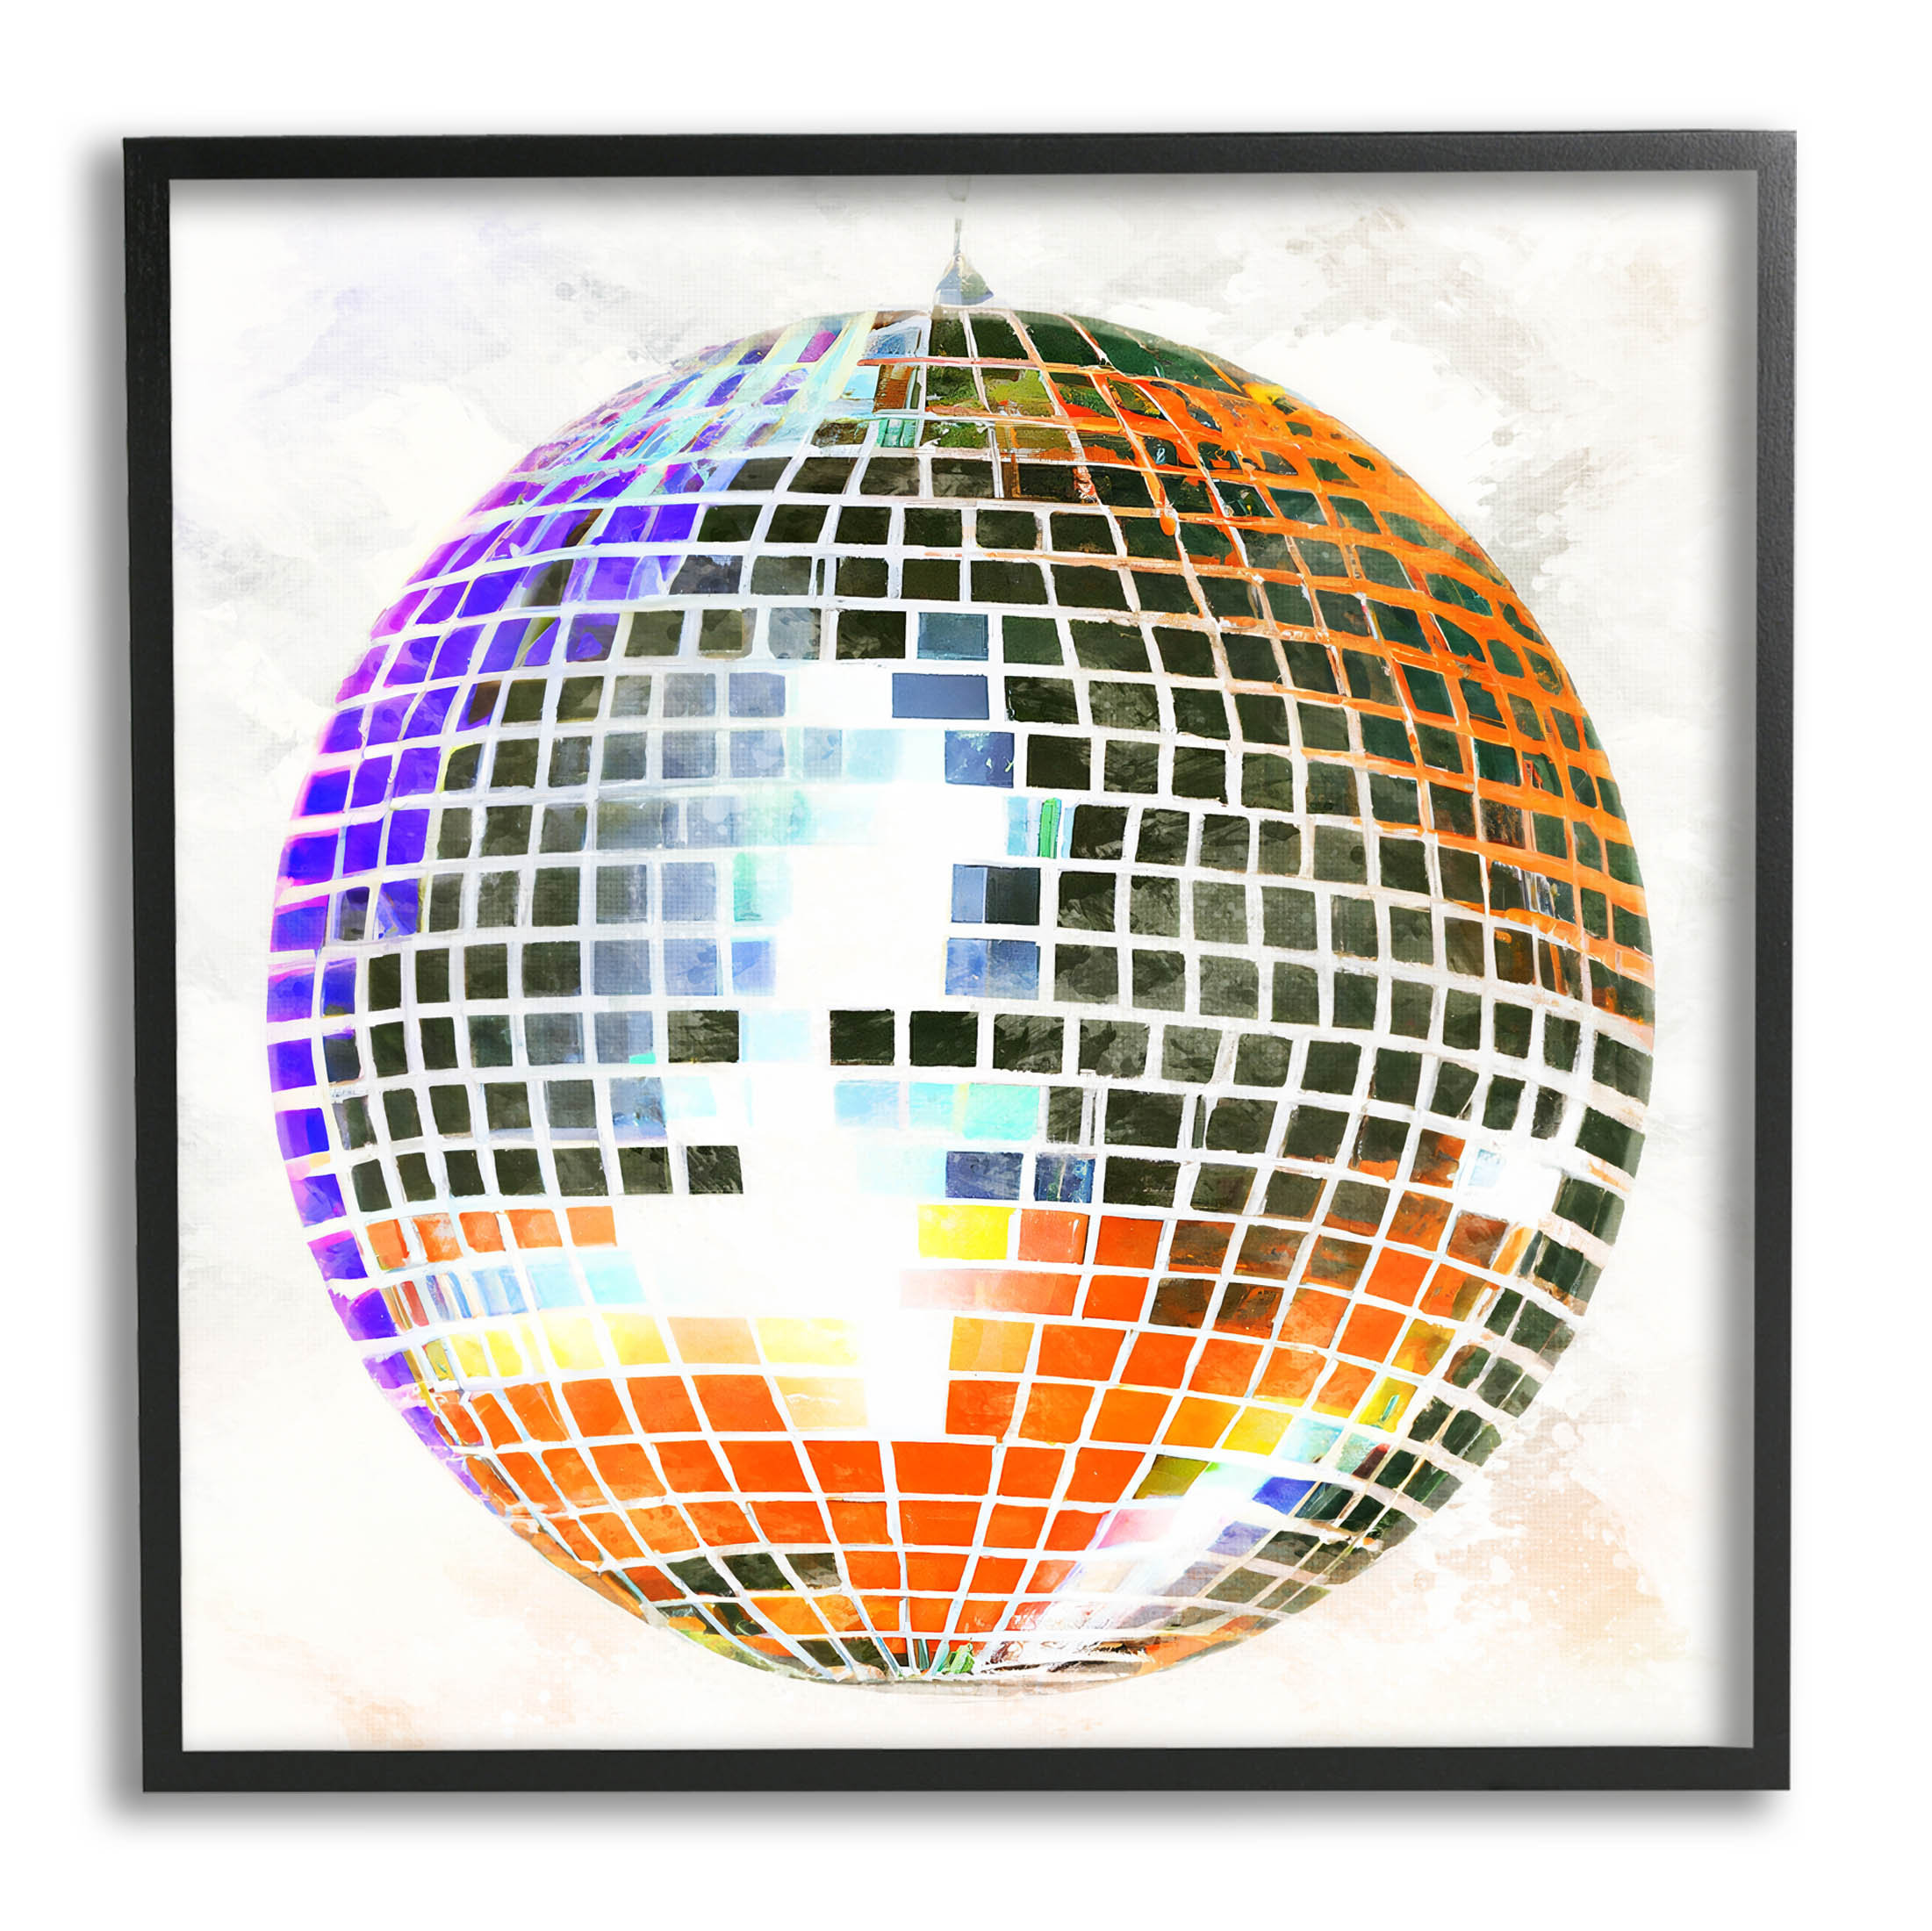 Disco Inferno Disco Ball Painting Print Studio 54 Party Acrylic